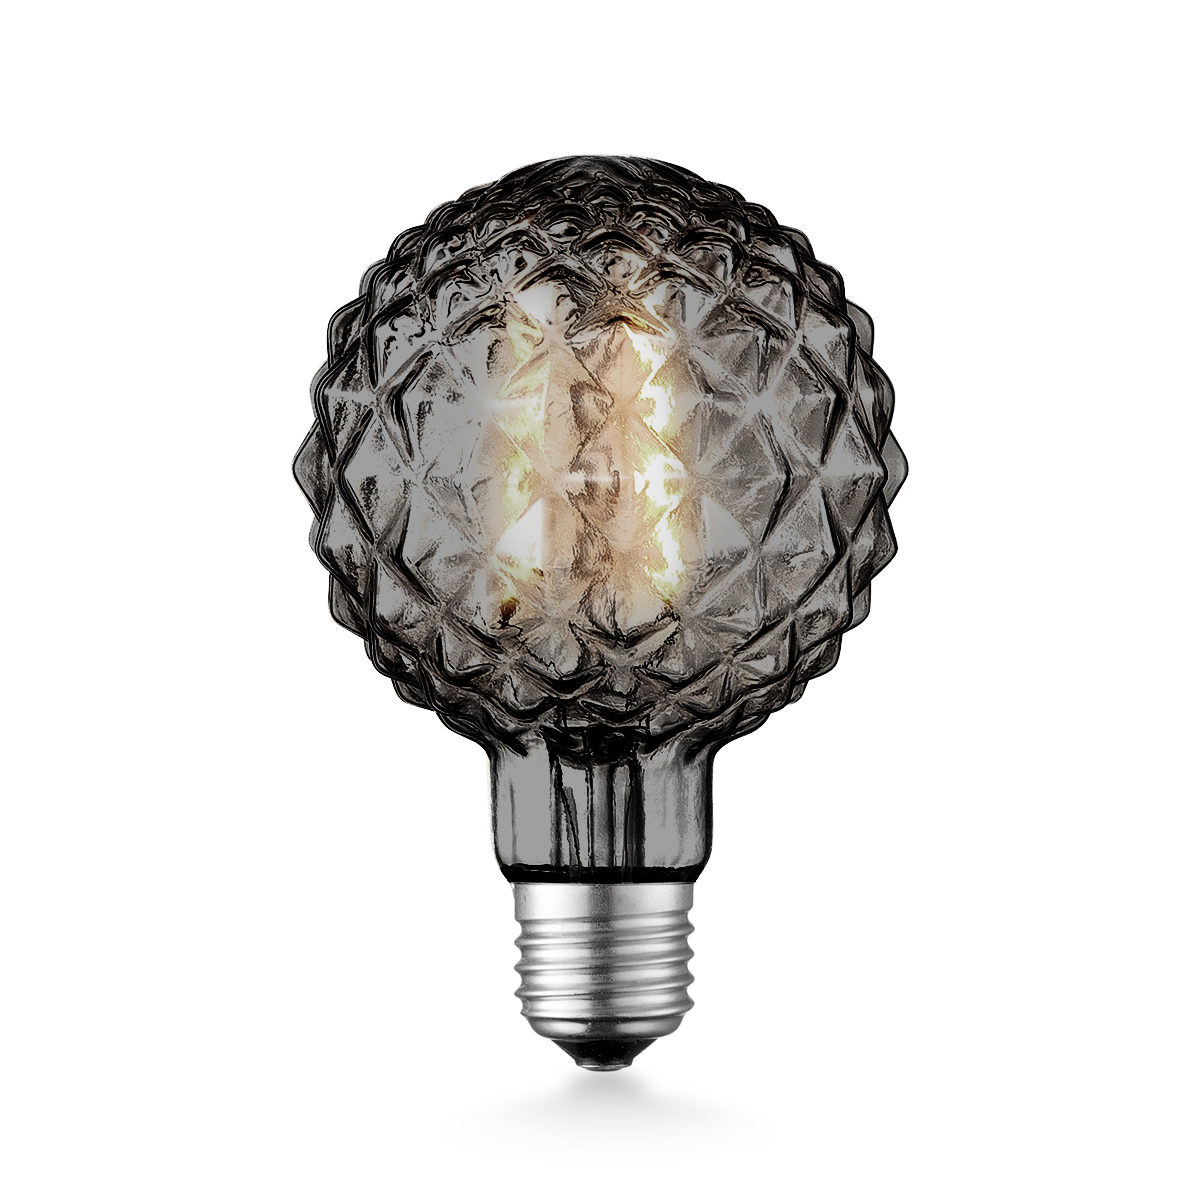 Tangla lighting - TLB-8072-02TM - LED Light Bulb Deco filament - G95 2W titanium - non dimmable - grenade - E27